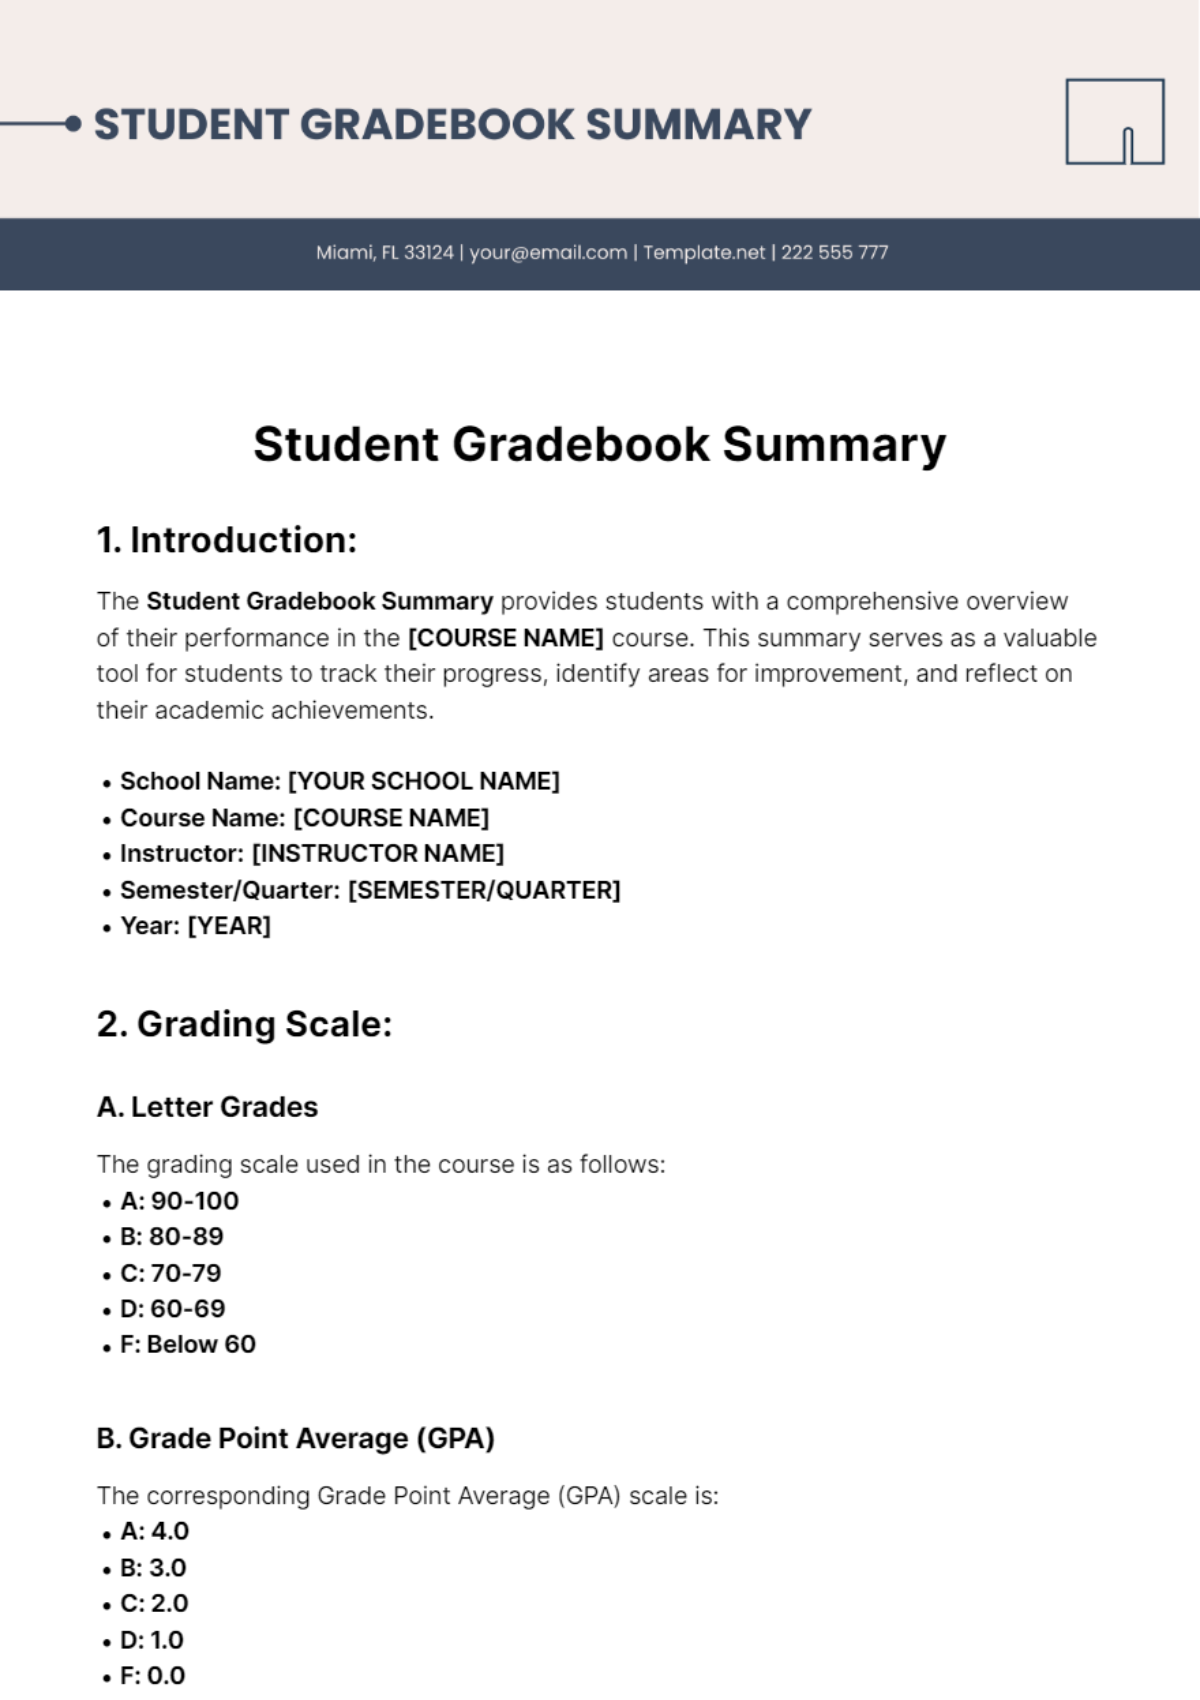 Student Gradebook Summary Template